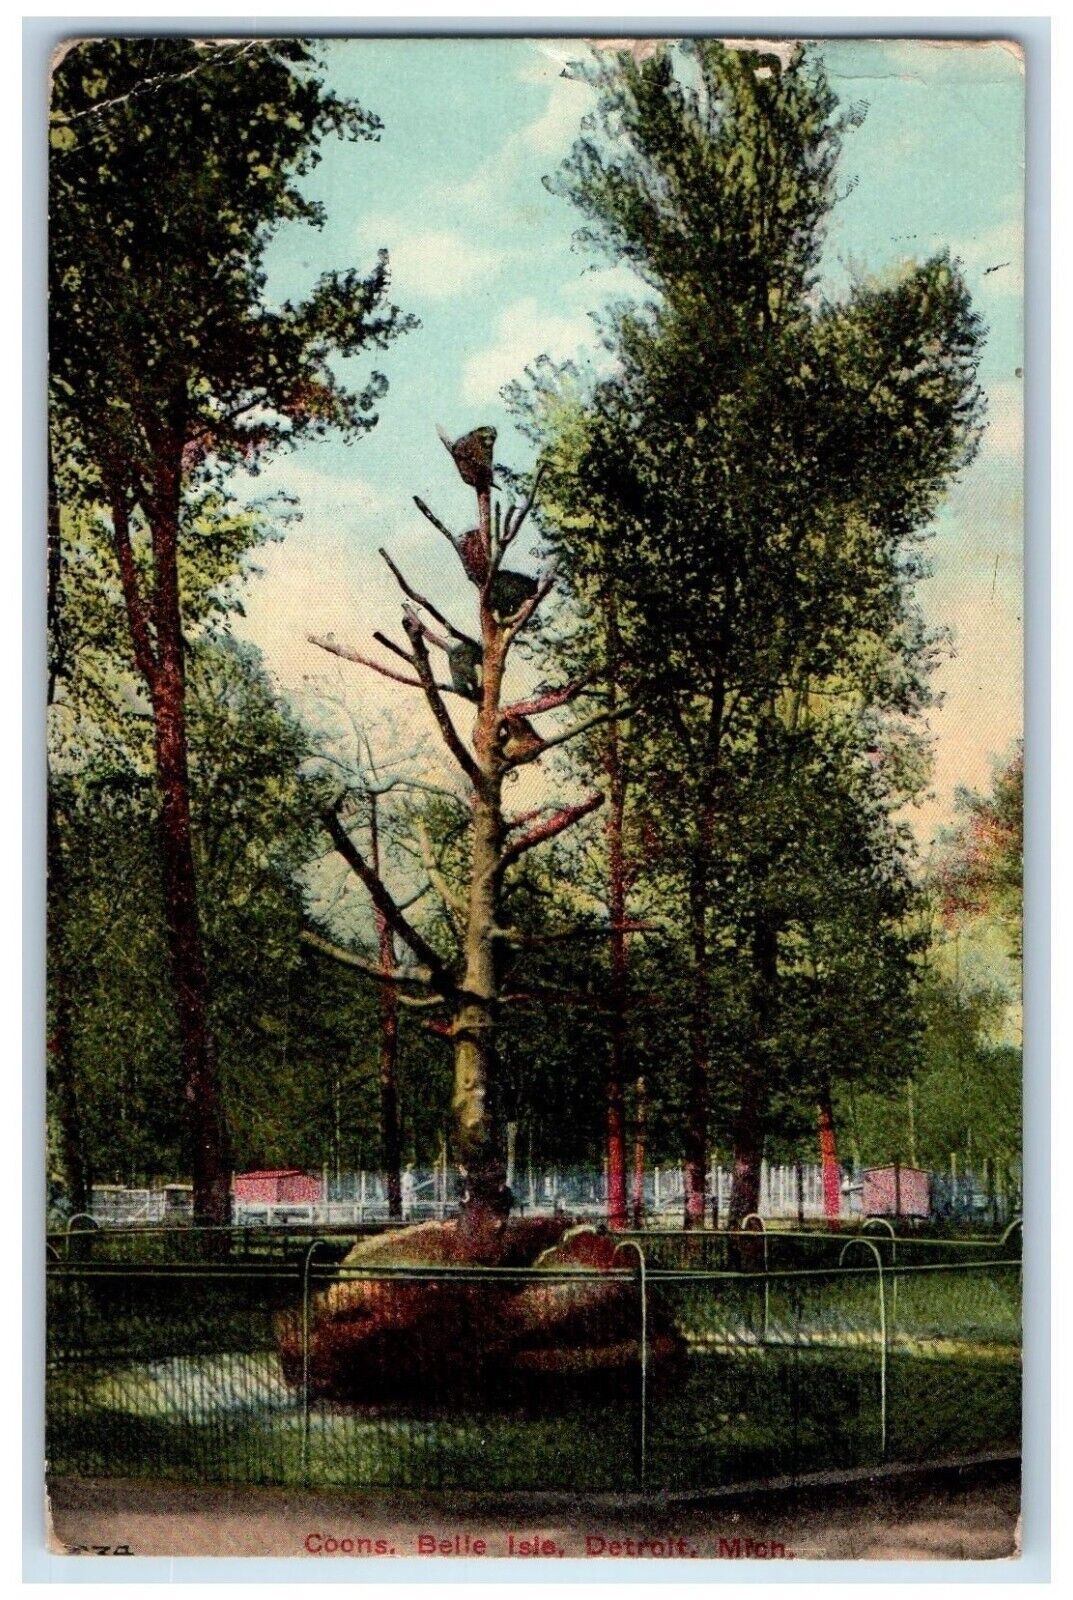 1912 Coons Belle Isle Windsor Canada Beautiful Parks Detroit Michigan Postcard